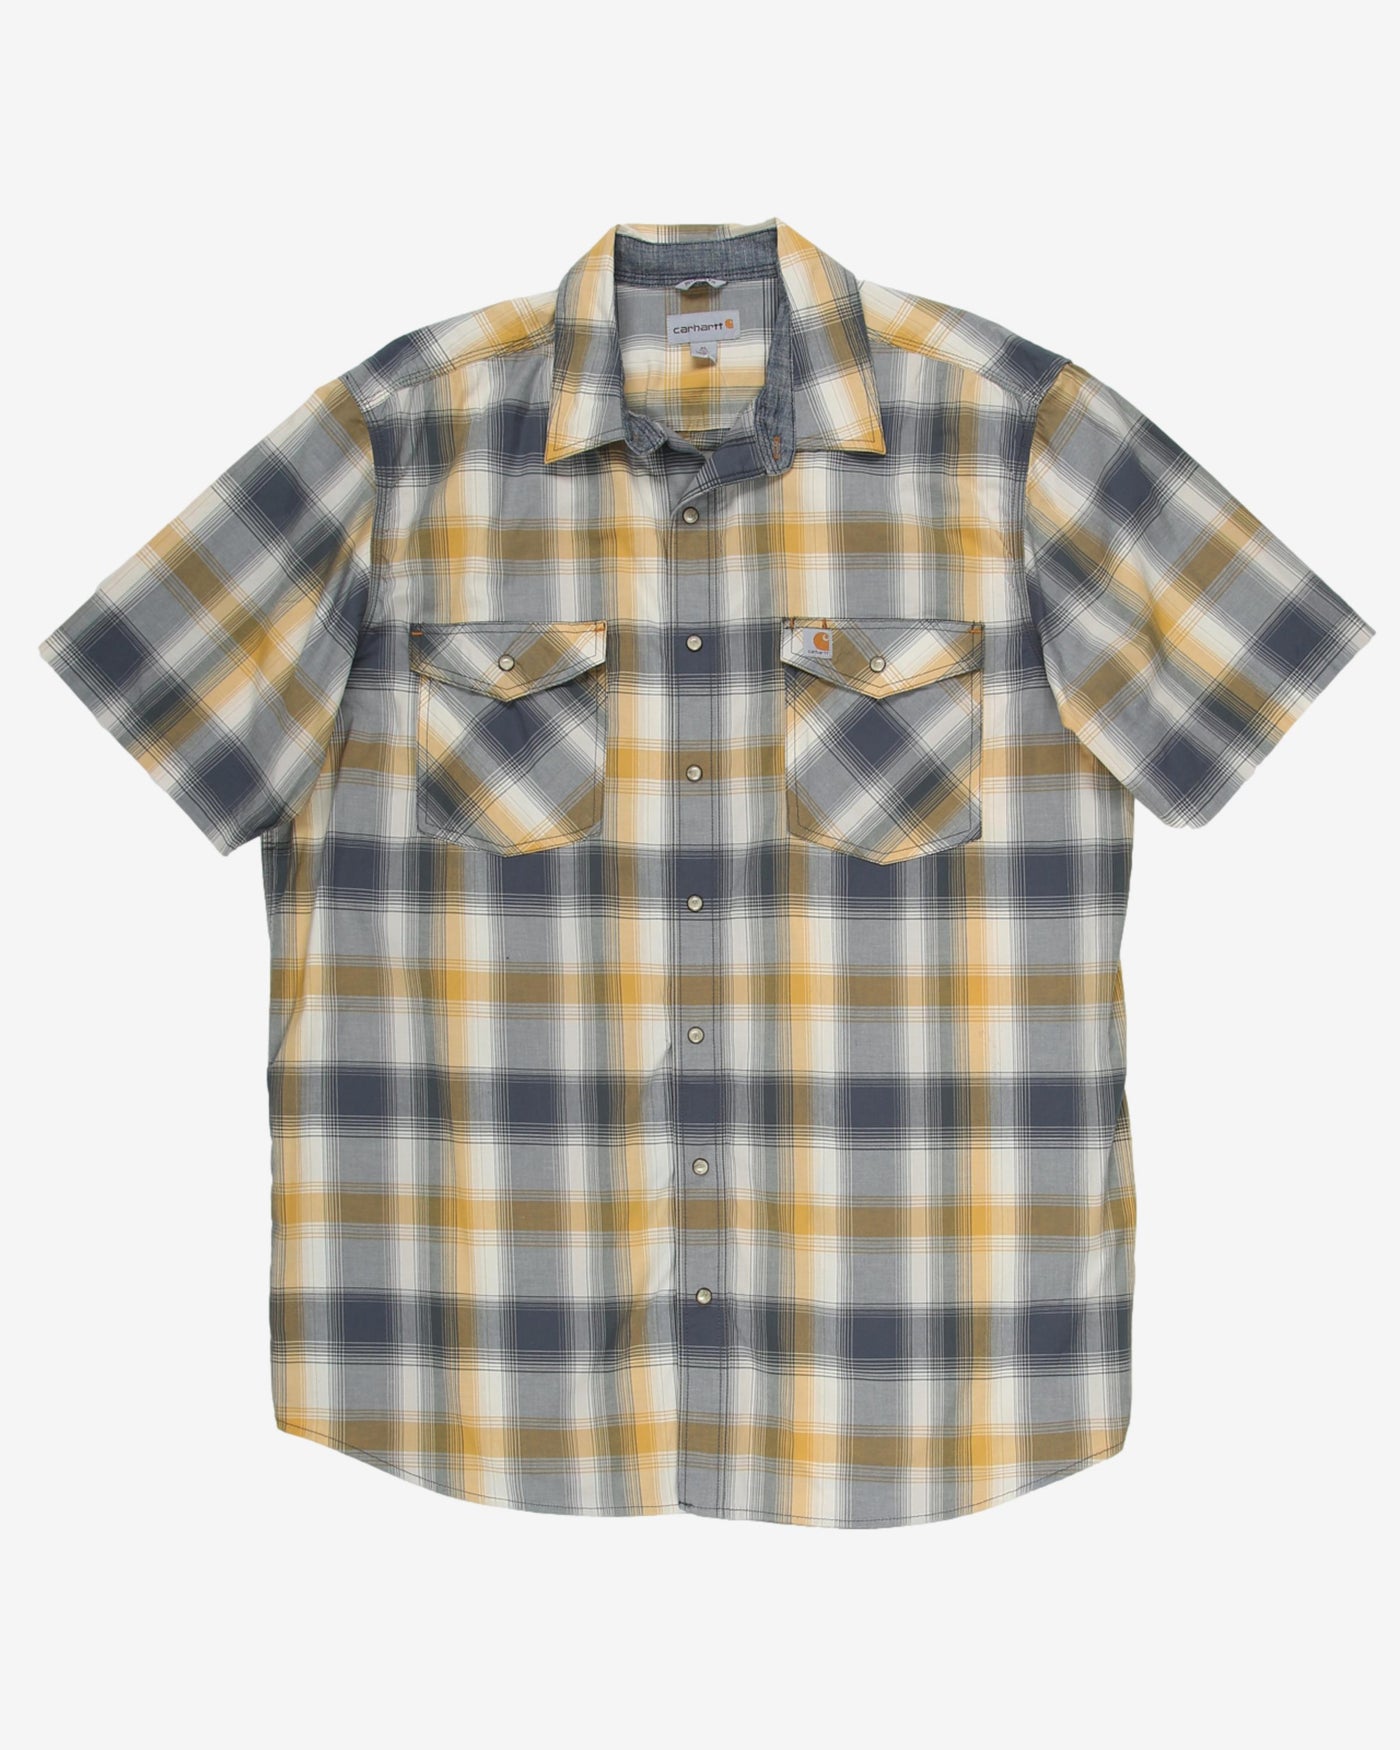 Carhartt checked shirt - XL